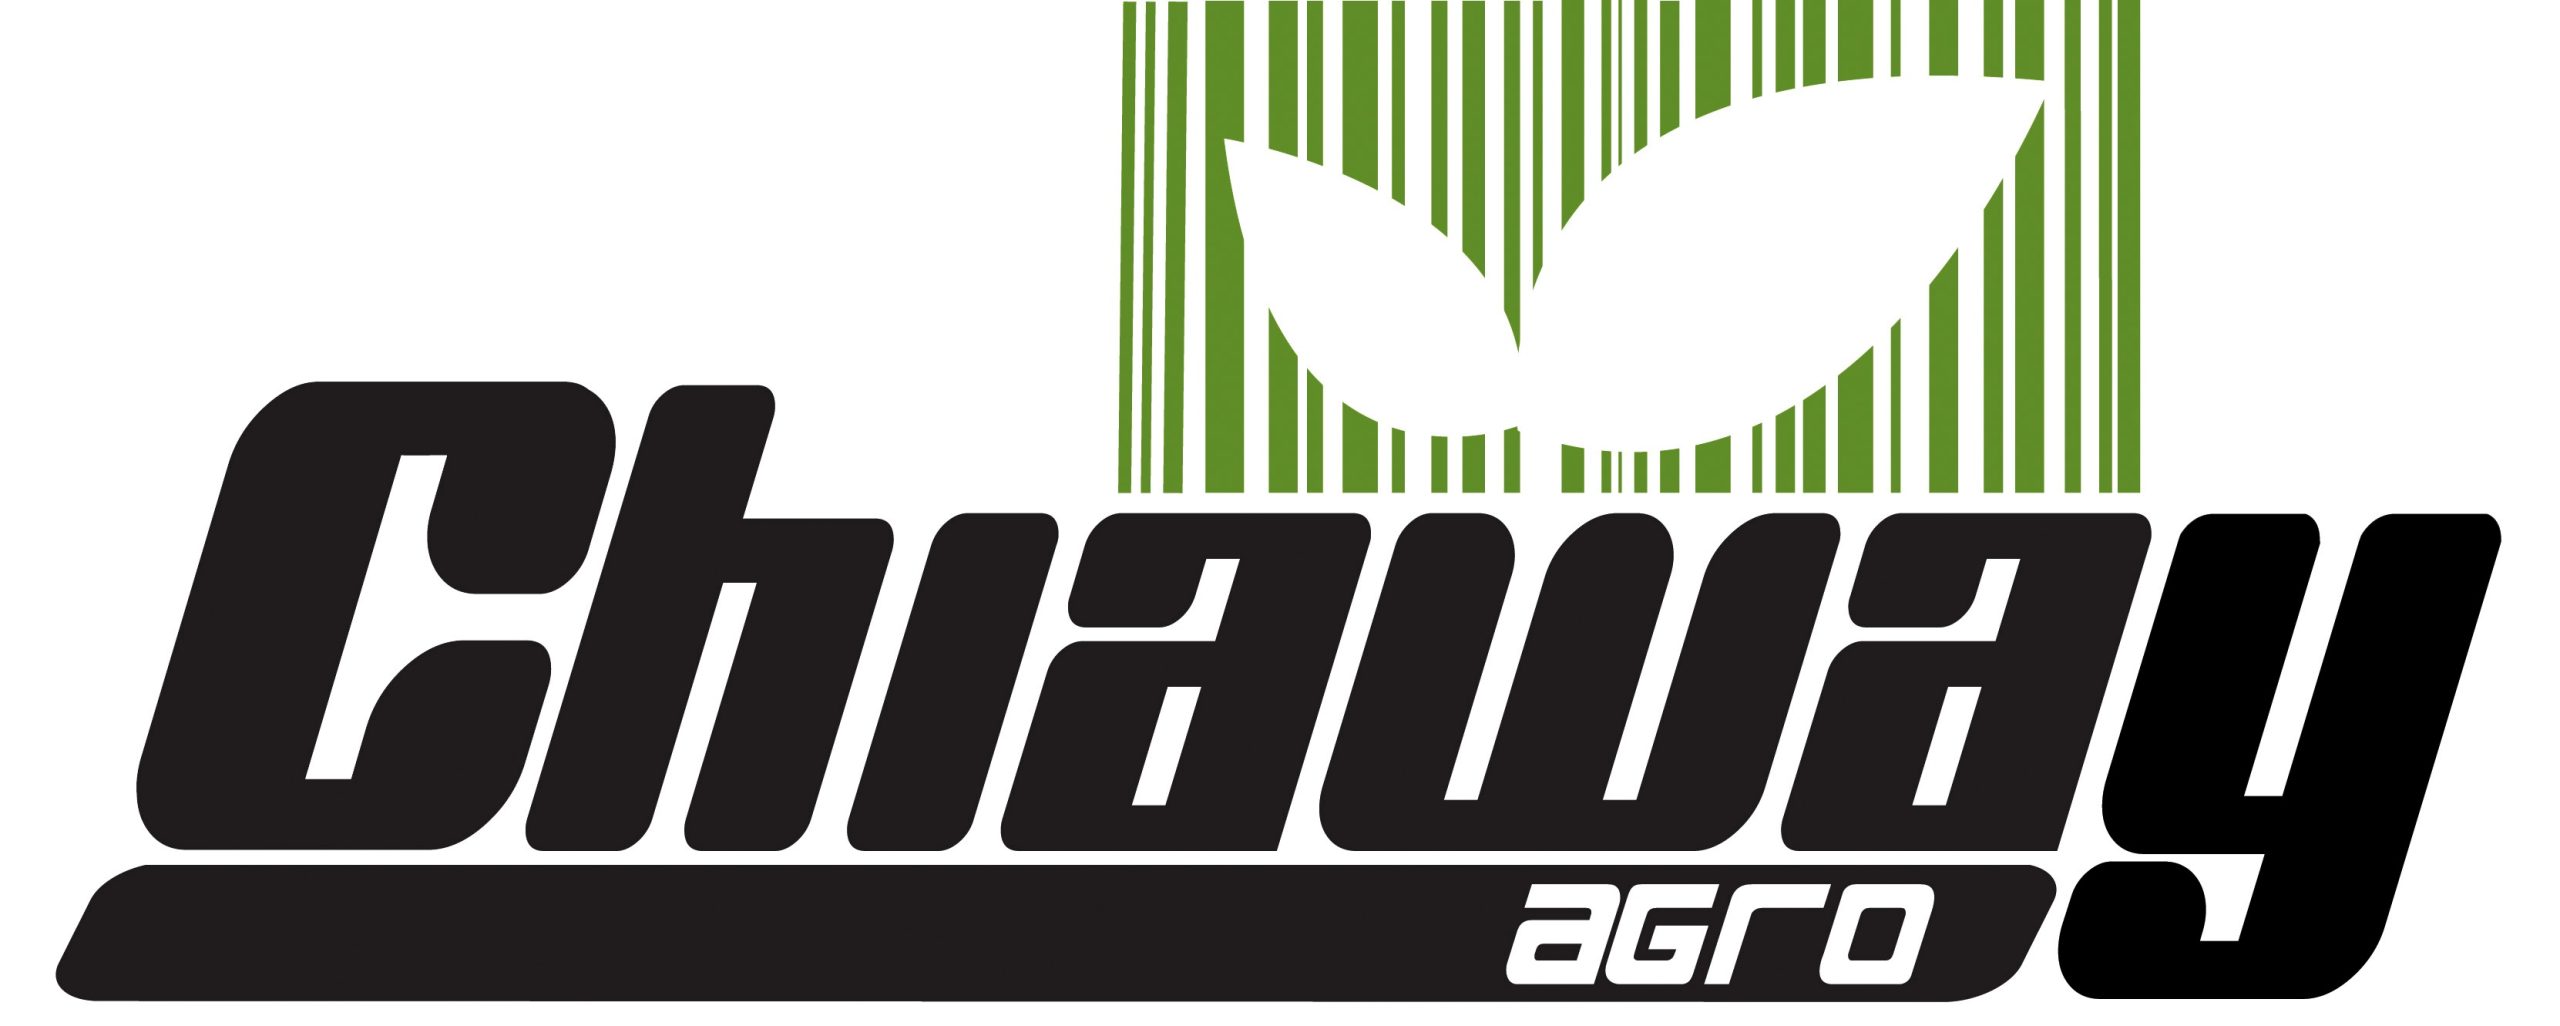 Logo_ChiaWay Agro